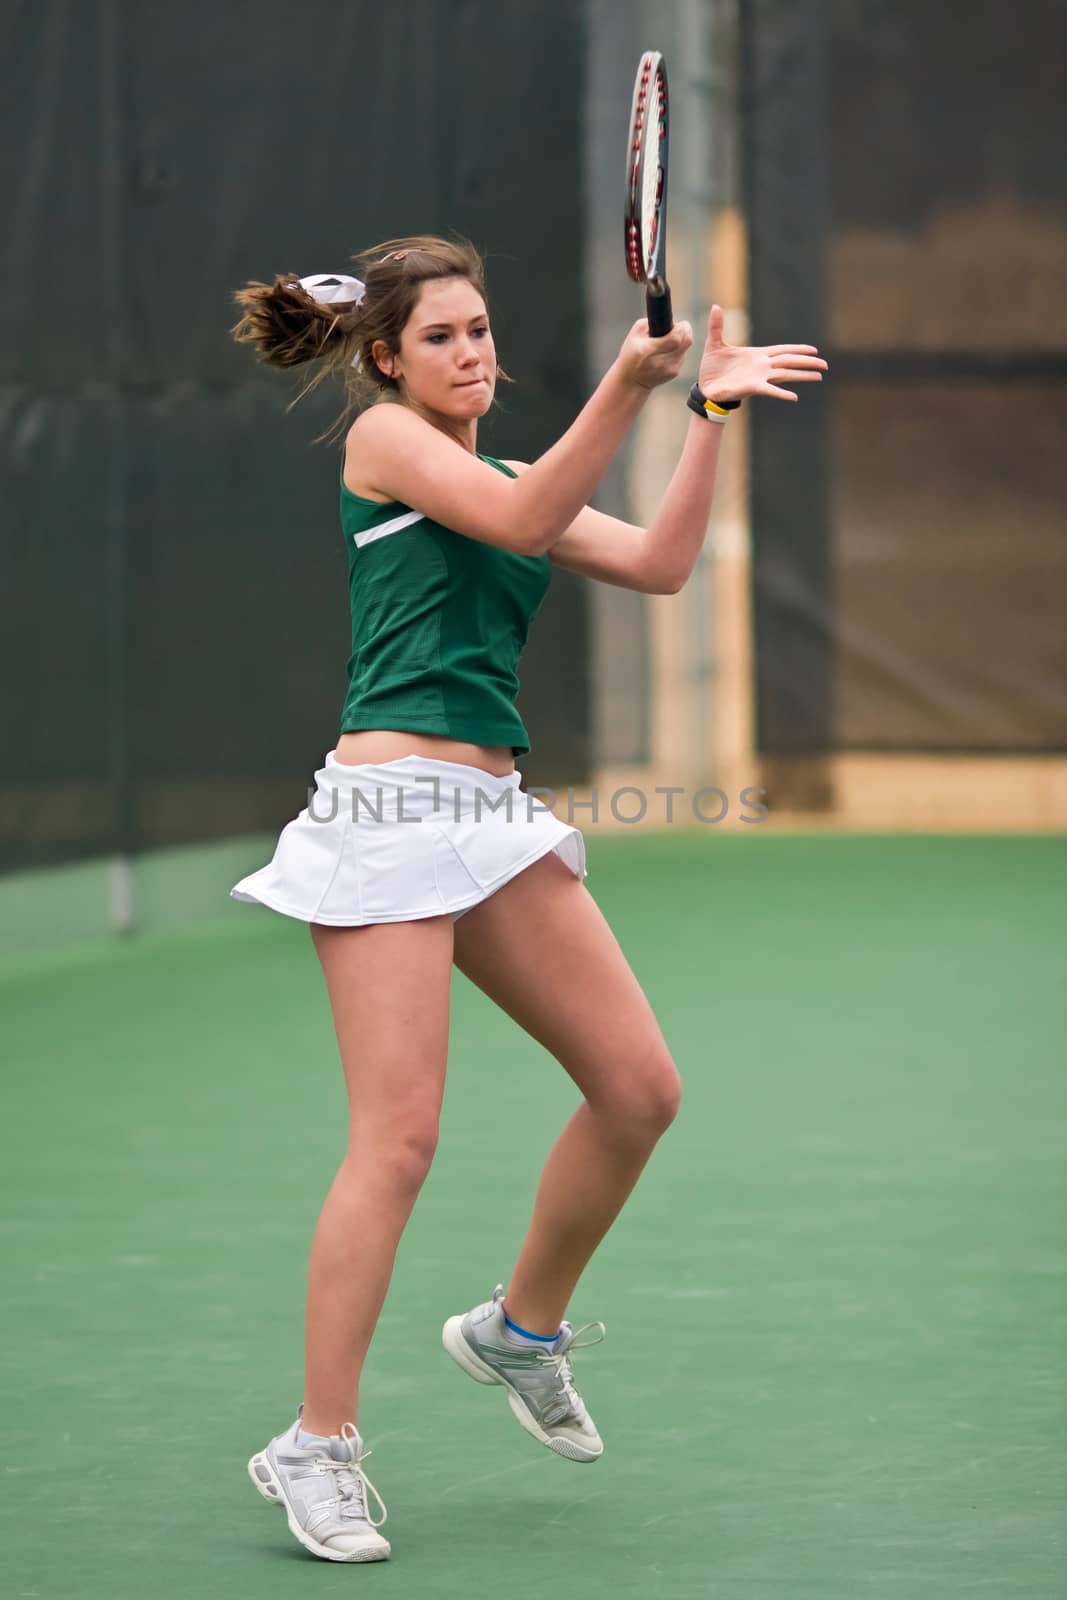 A female high school tennis player follows through after hitting a forehand in match.